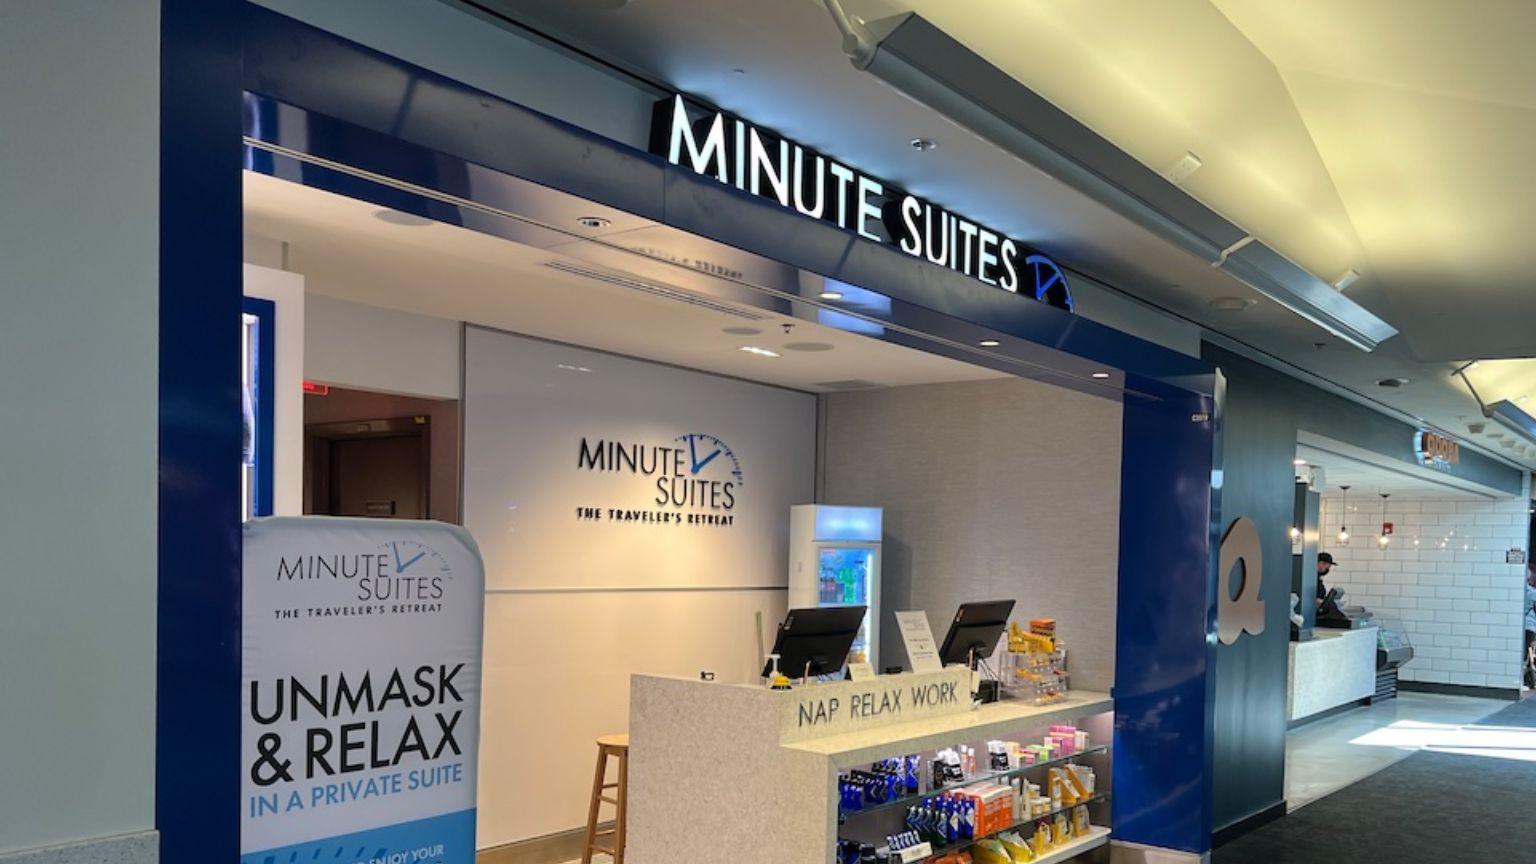 Minute Suites JFK, Terminal 4